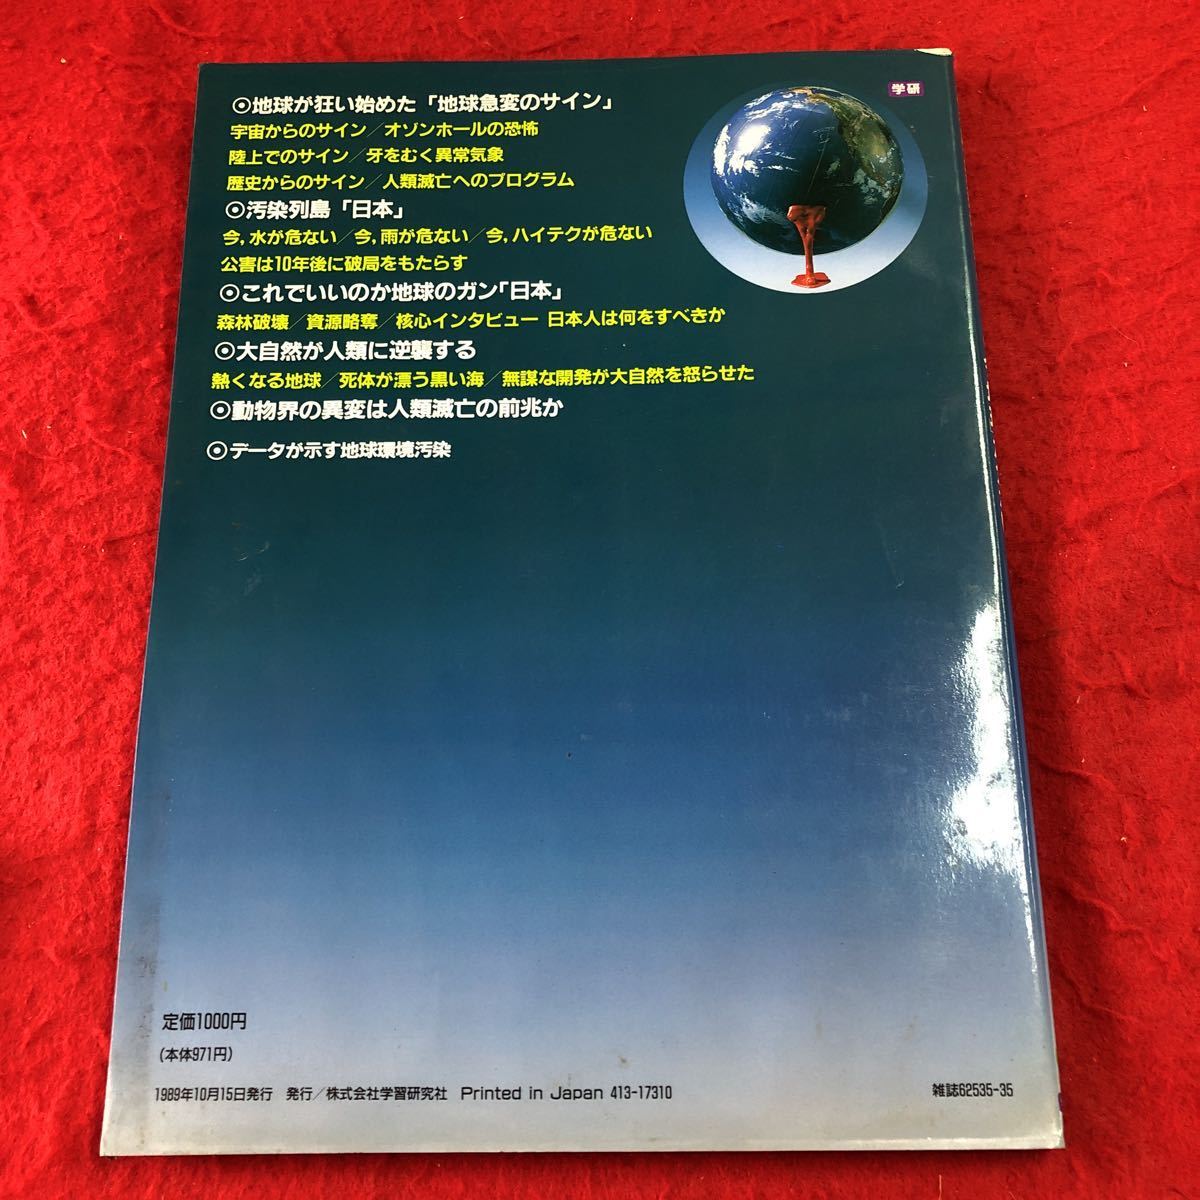 S6c-190 今、地球が危ない ウータン 驚異の科学シリーズ 1 保存版 地球環境白書 1989年10月15日 発行 学習研究社 雑誌 環境 水質汚染 自然_背表紙に汚れあり